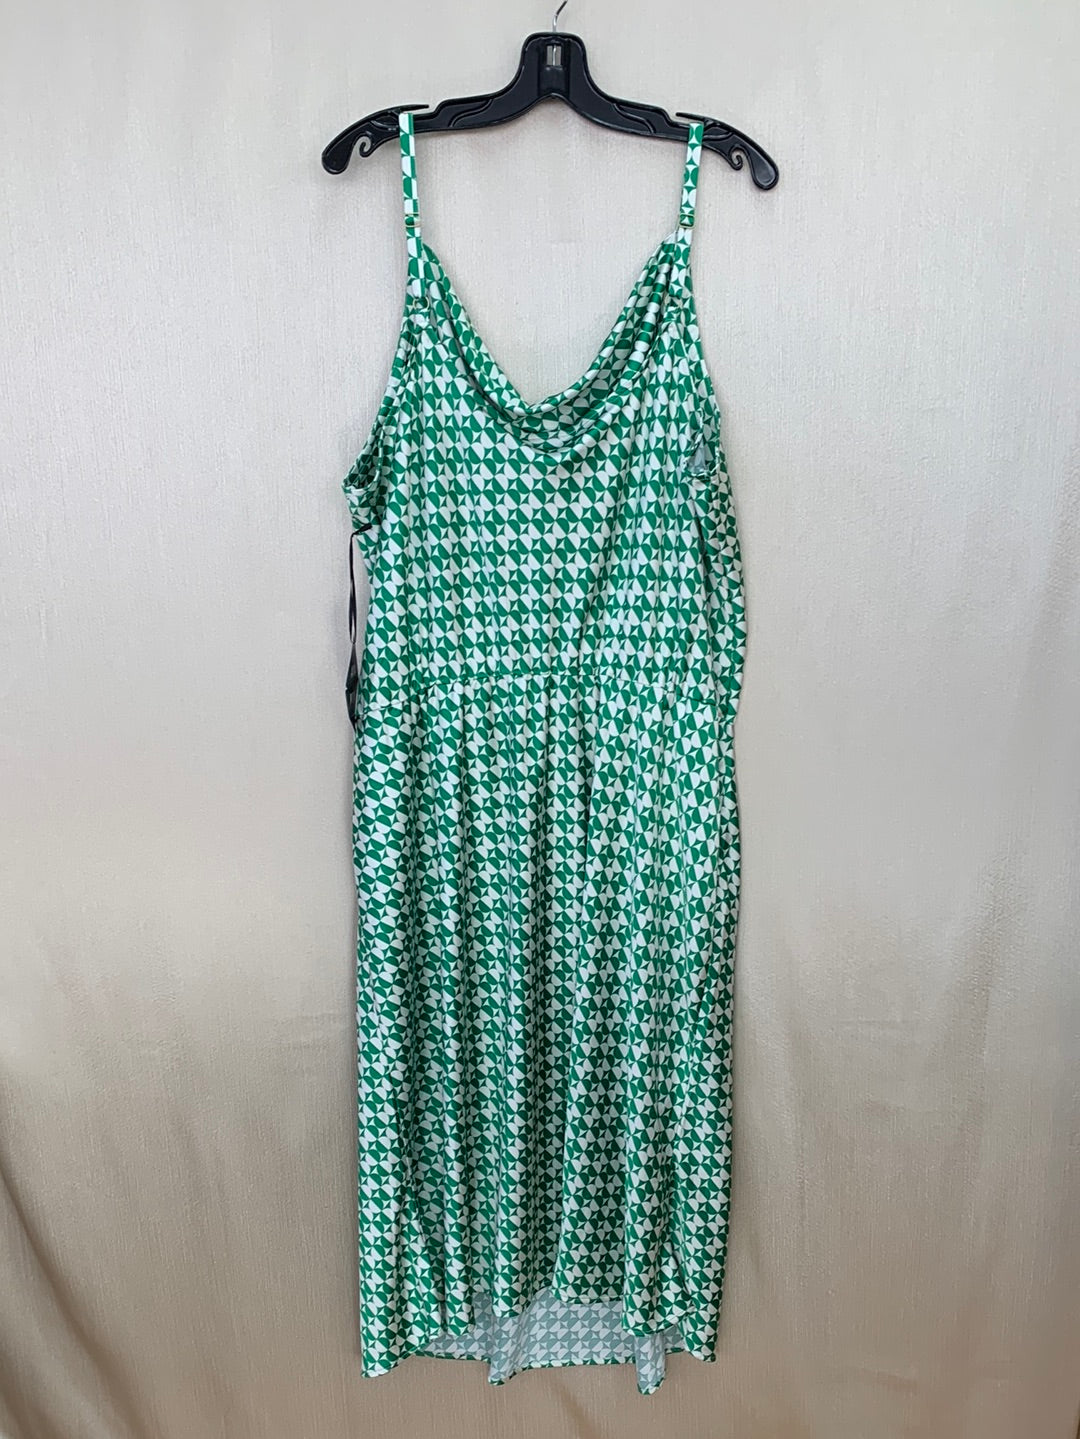 NWT - AVA & VIV green white Geometric Print Sleeveless Dress - 3X